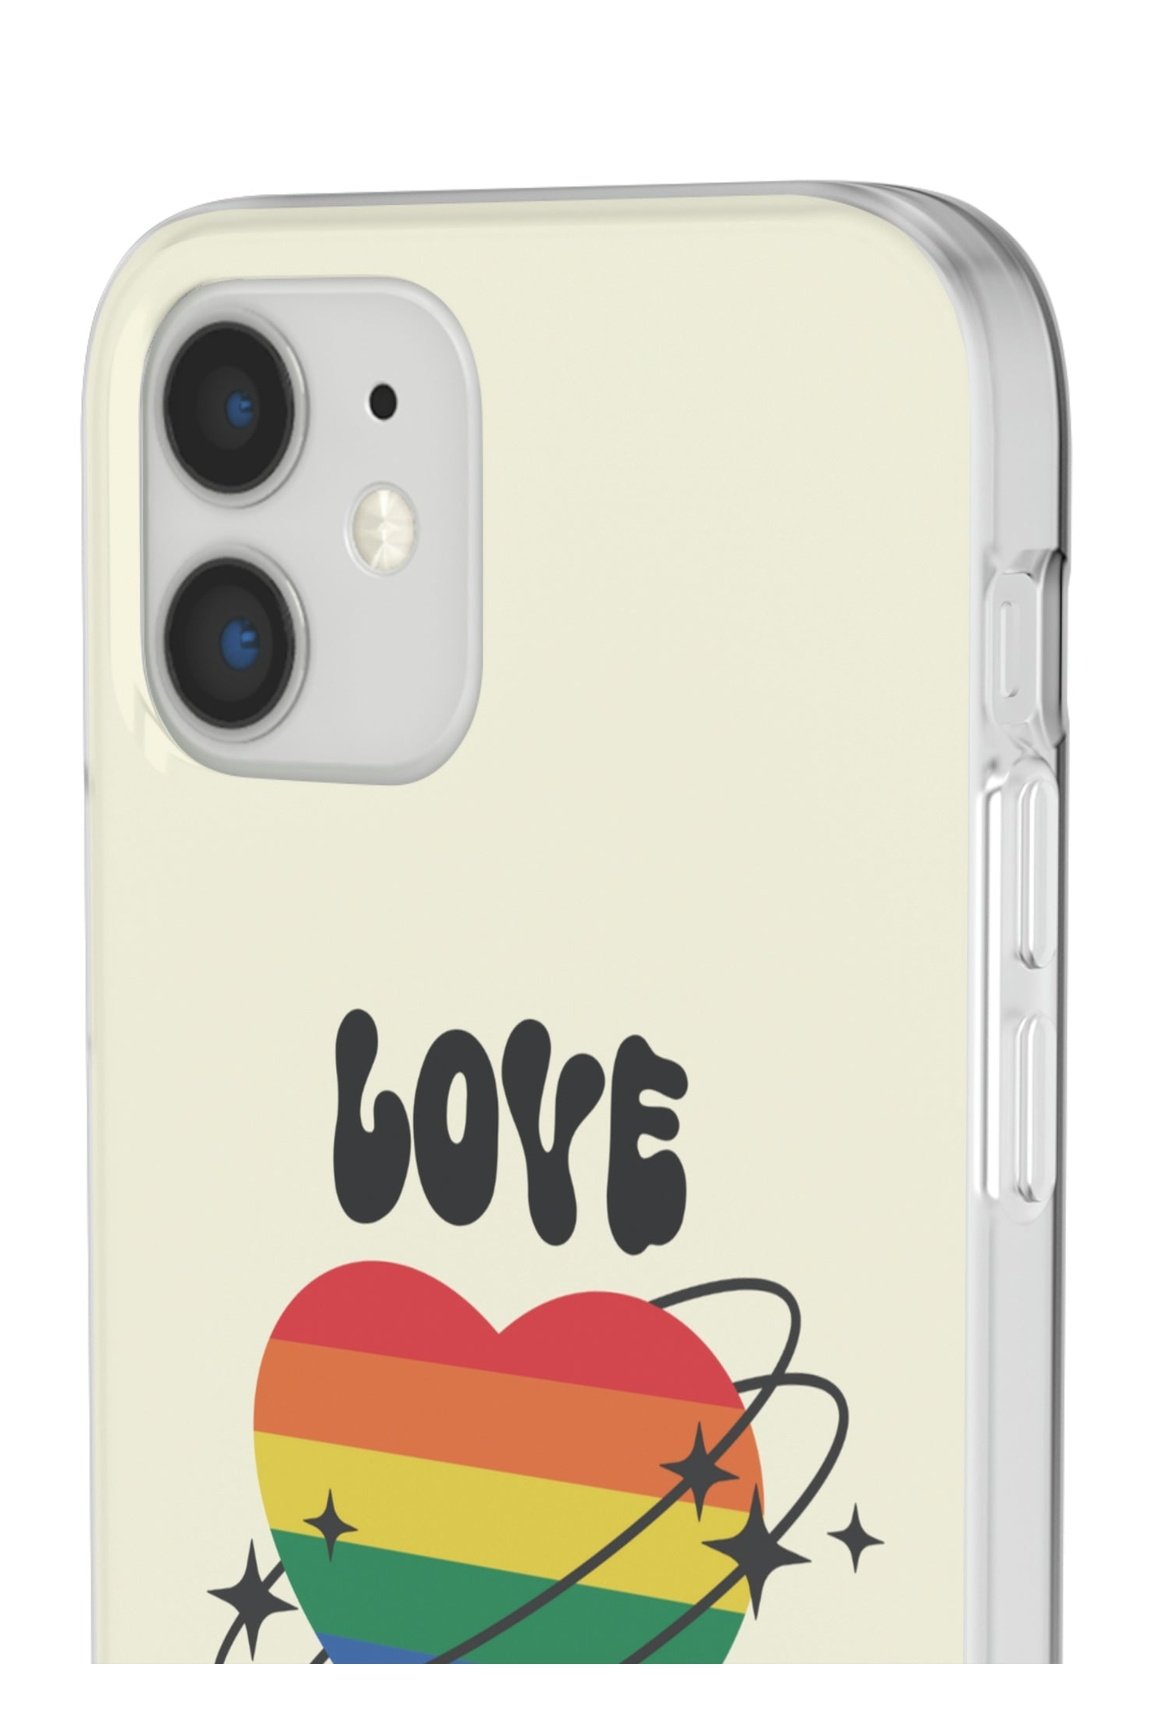 Love Always Wins Flexi Phone Cases